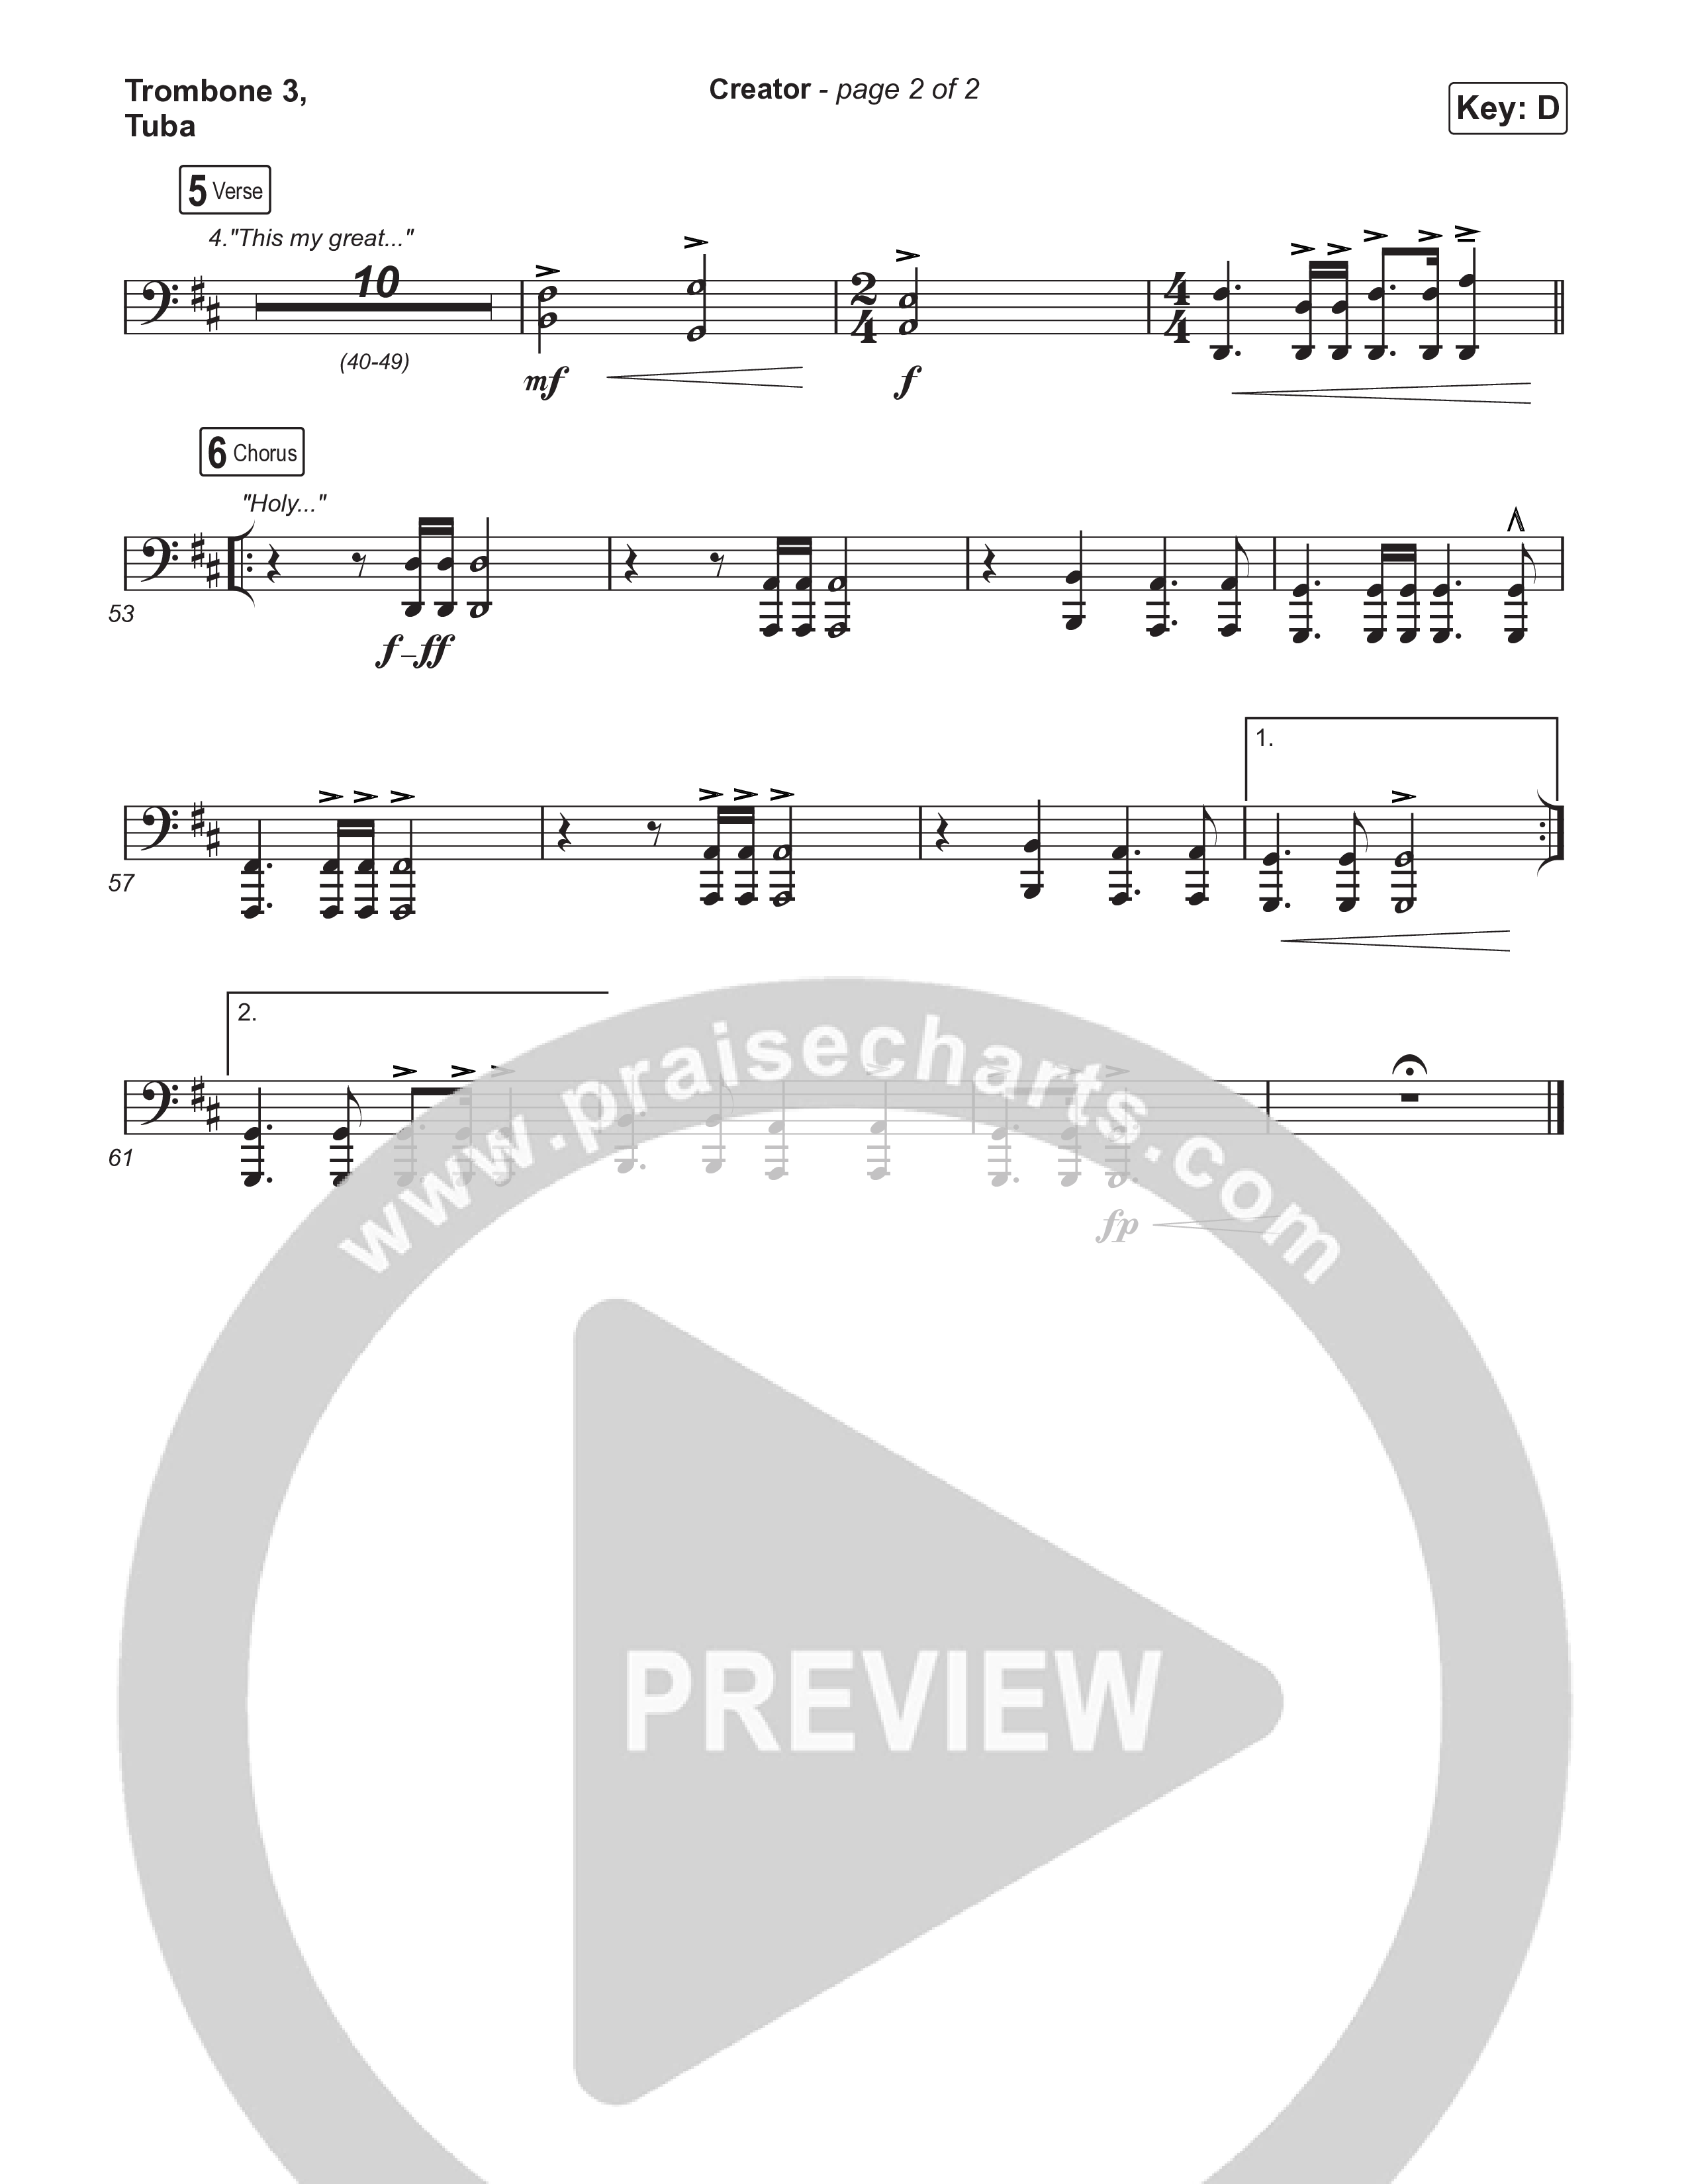 Creator (Choral Anthem SATB) Trombone 3/Tuba (Phil Wickham / Arr. Mason Brown)